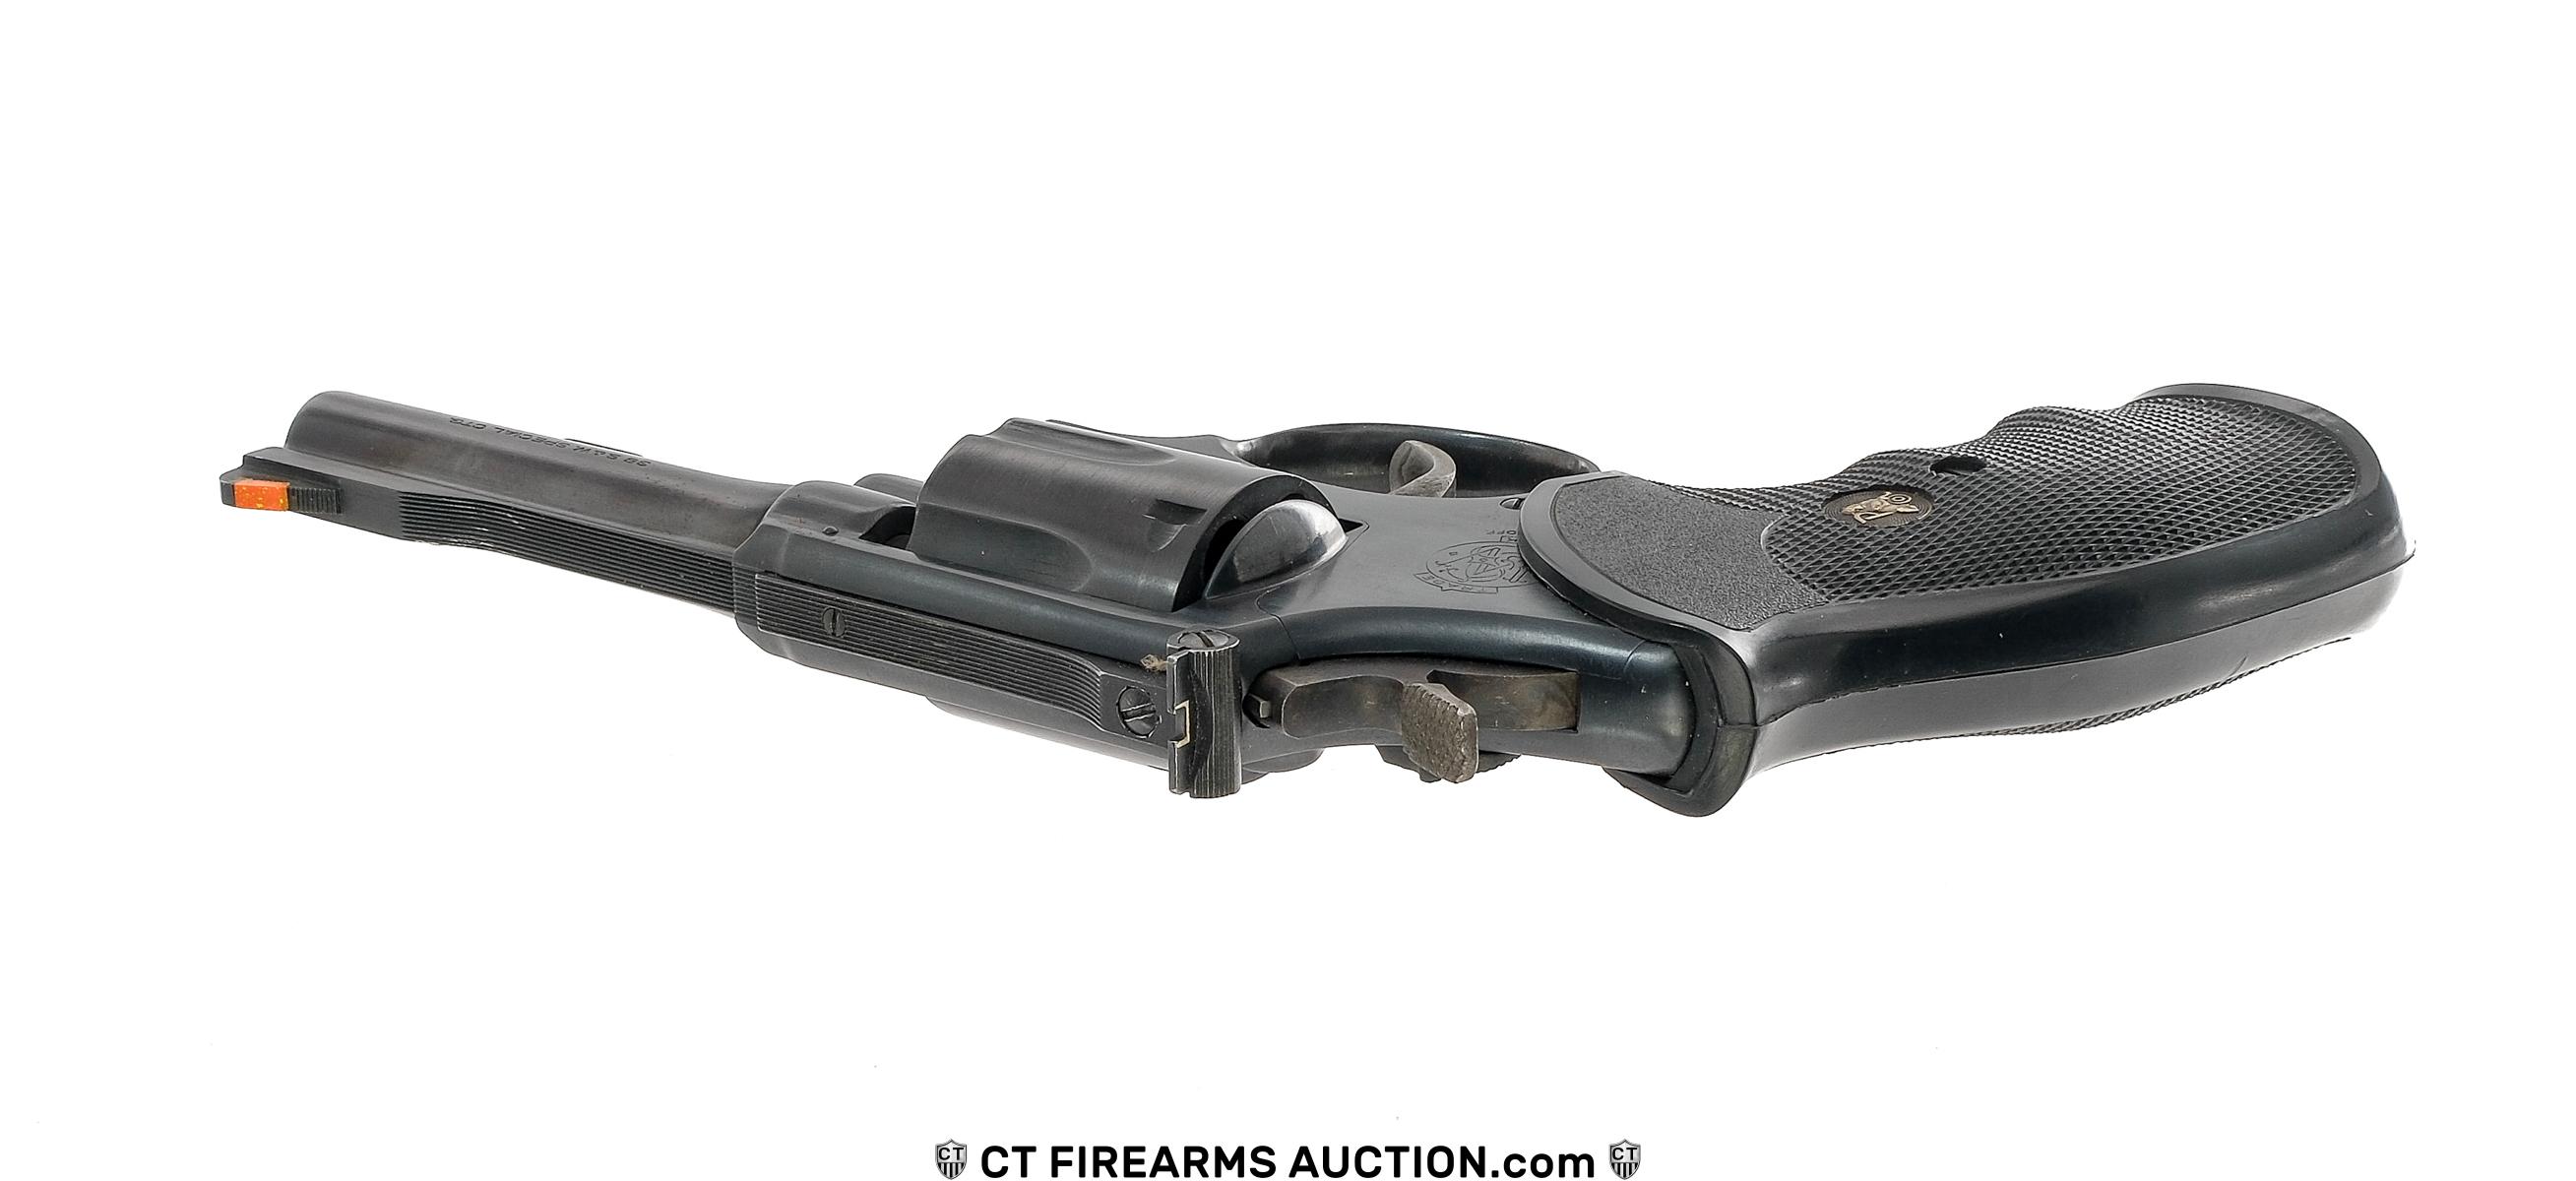 Smith & Wesson 15-3 .38 Spl Revolver